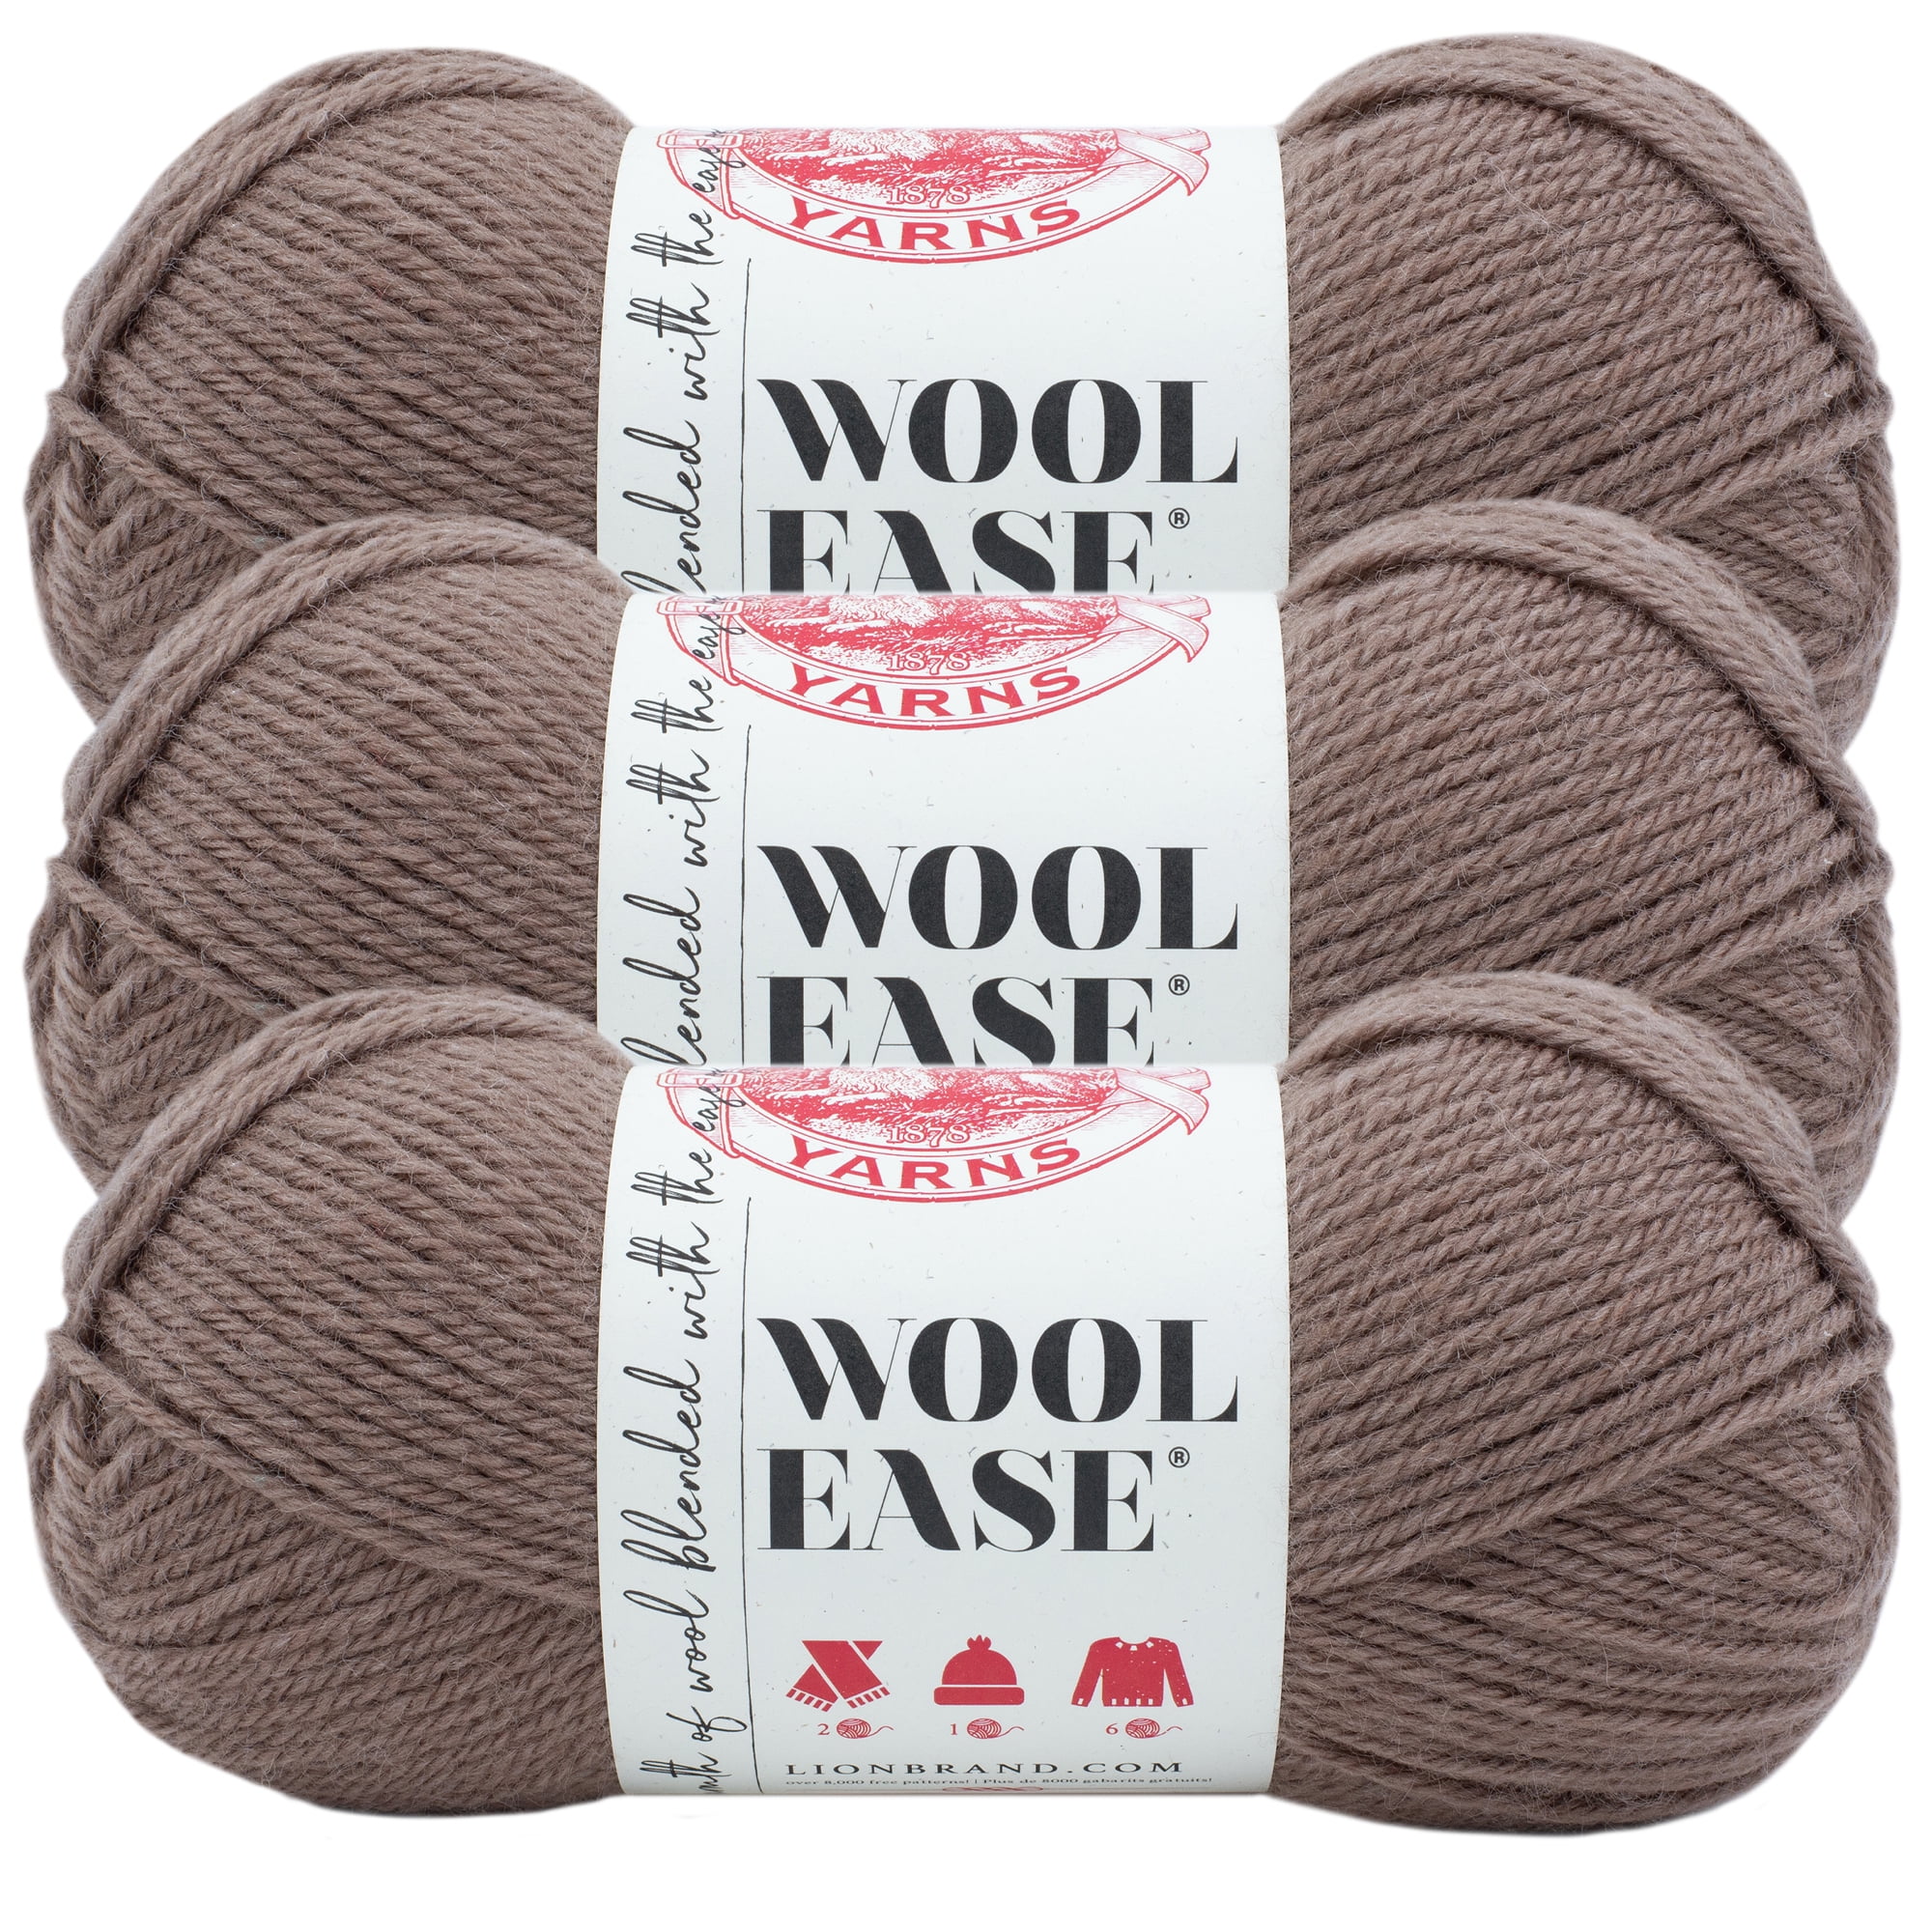 Lion Brand Yarn Wool-Ease Tawny Port Classic Worsted Medium Acrylic, Wool  Red Yarn 3 Pack